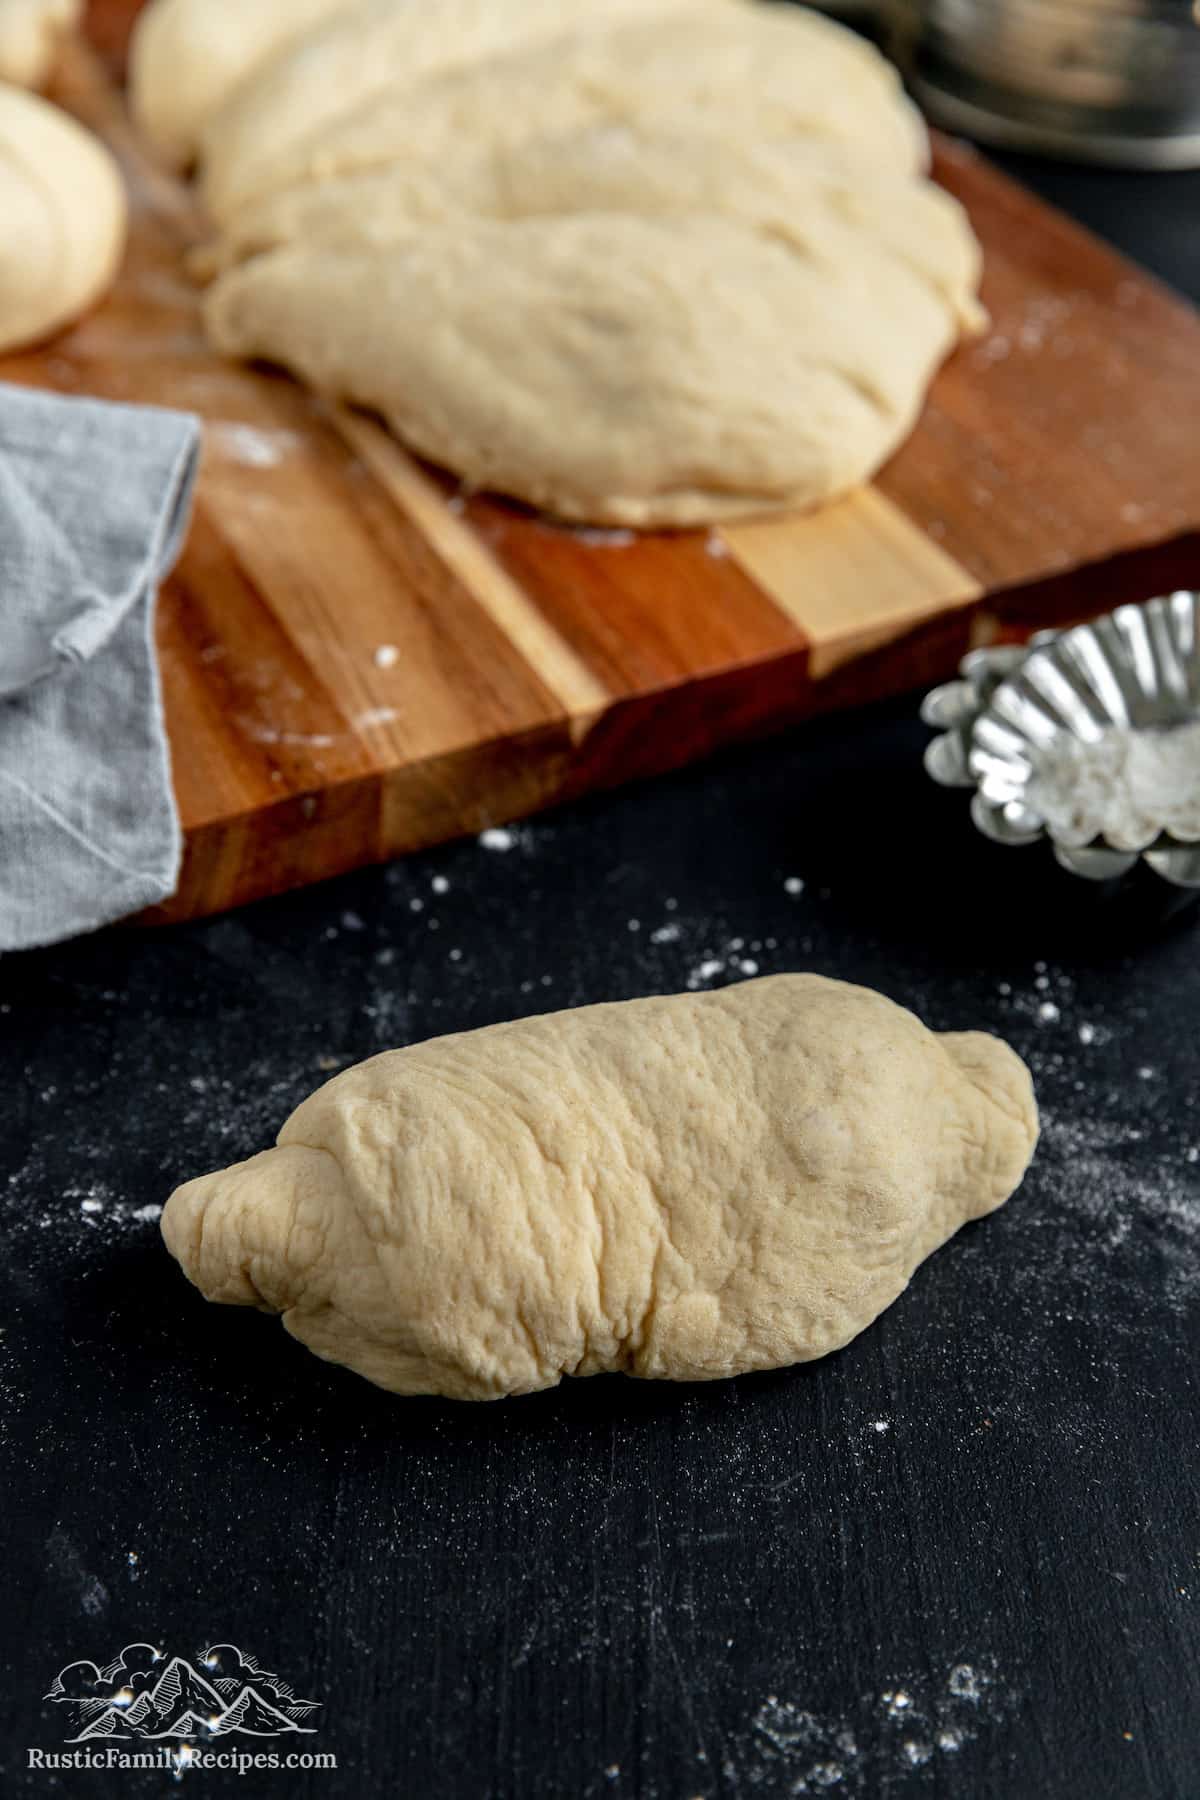 Dough shaped to be made into a bolillo